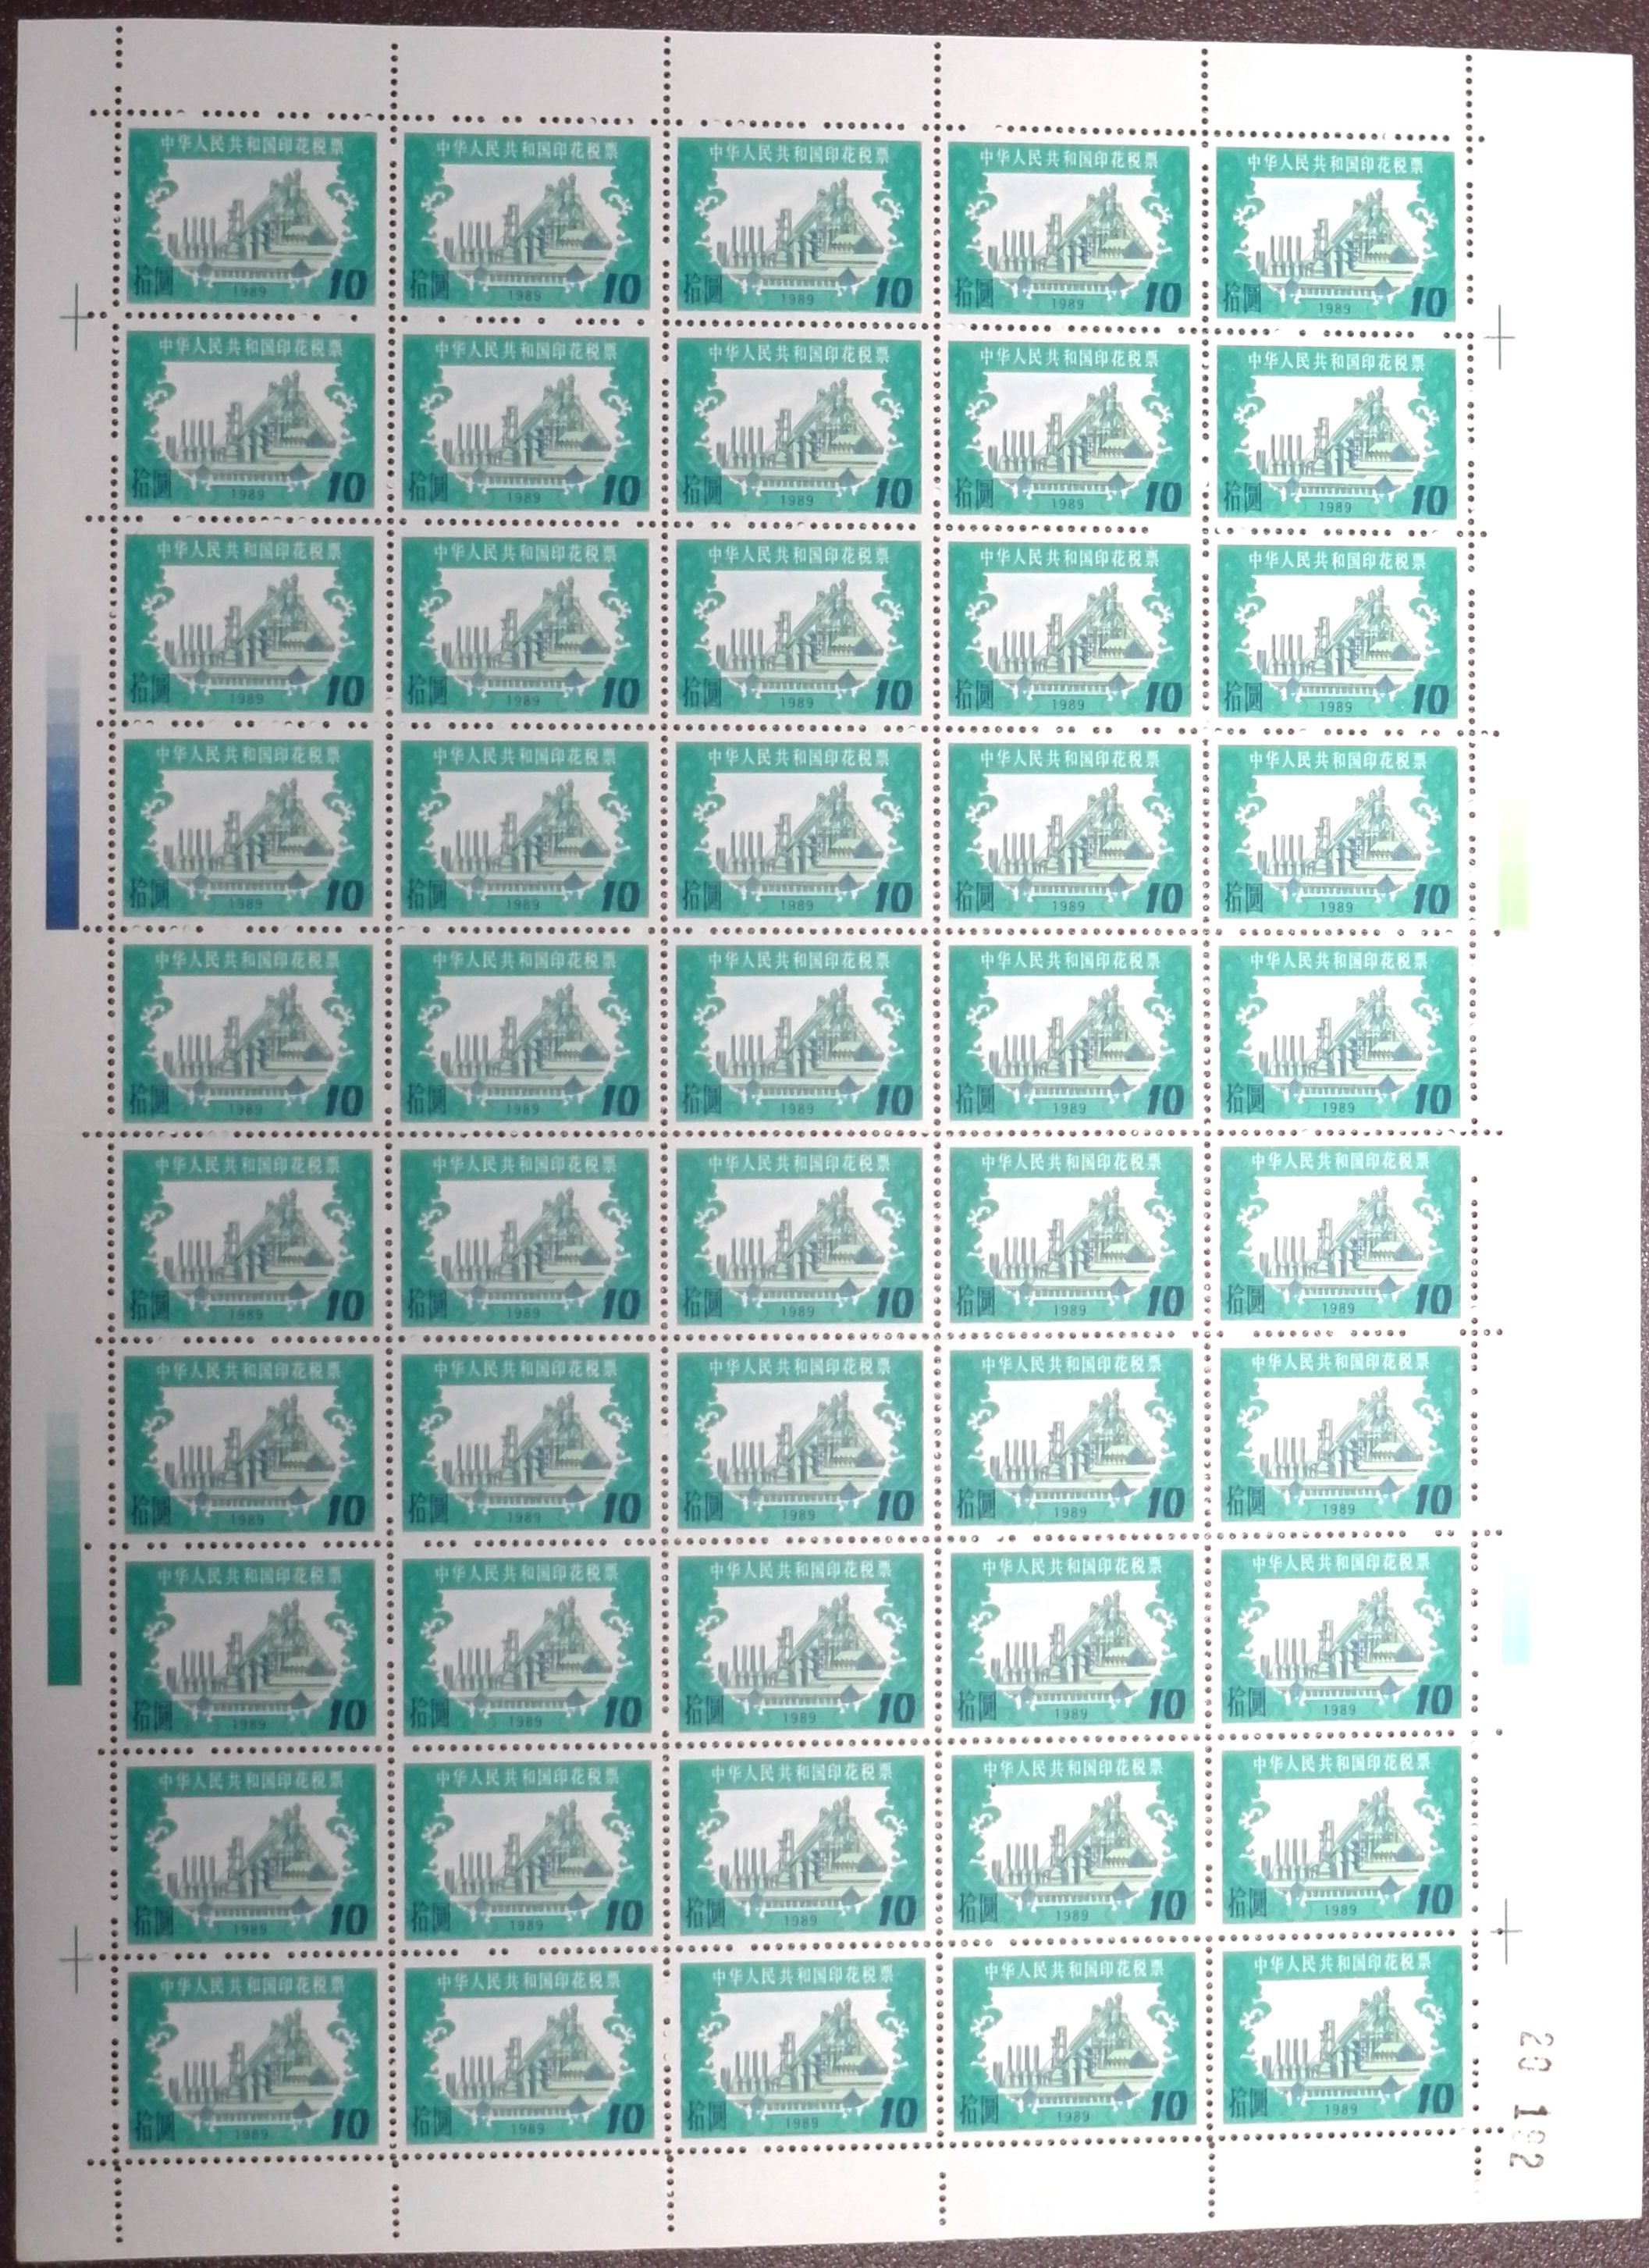 R2282, P.R.China Revenue Stamps, 10 Yuan, Full Sheet 50 pcs, 1989